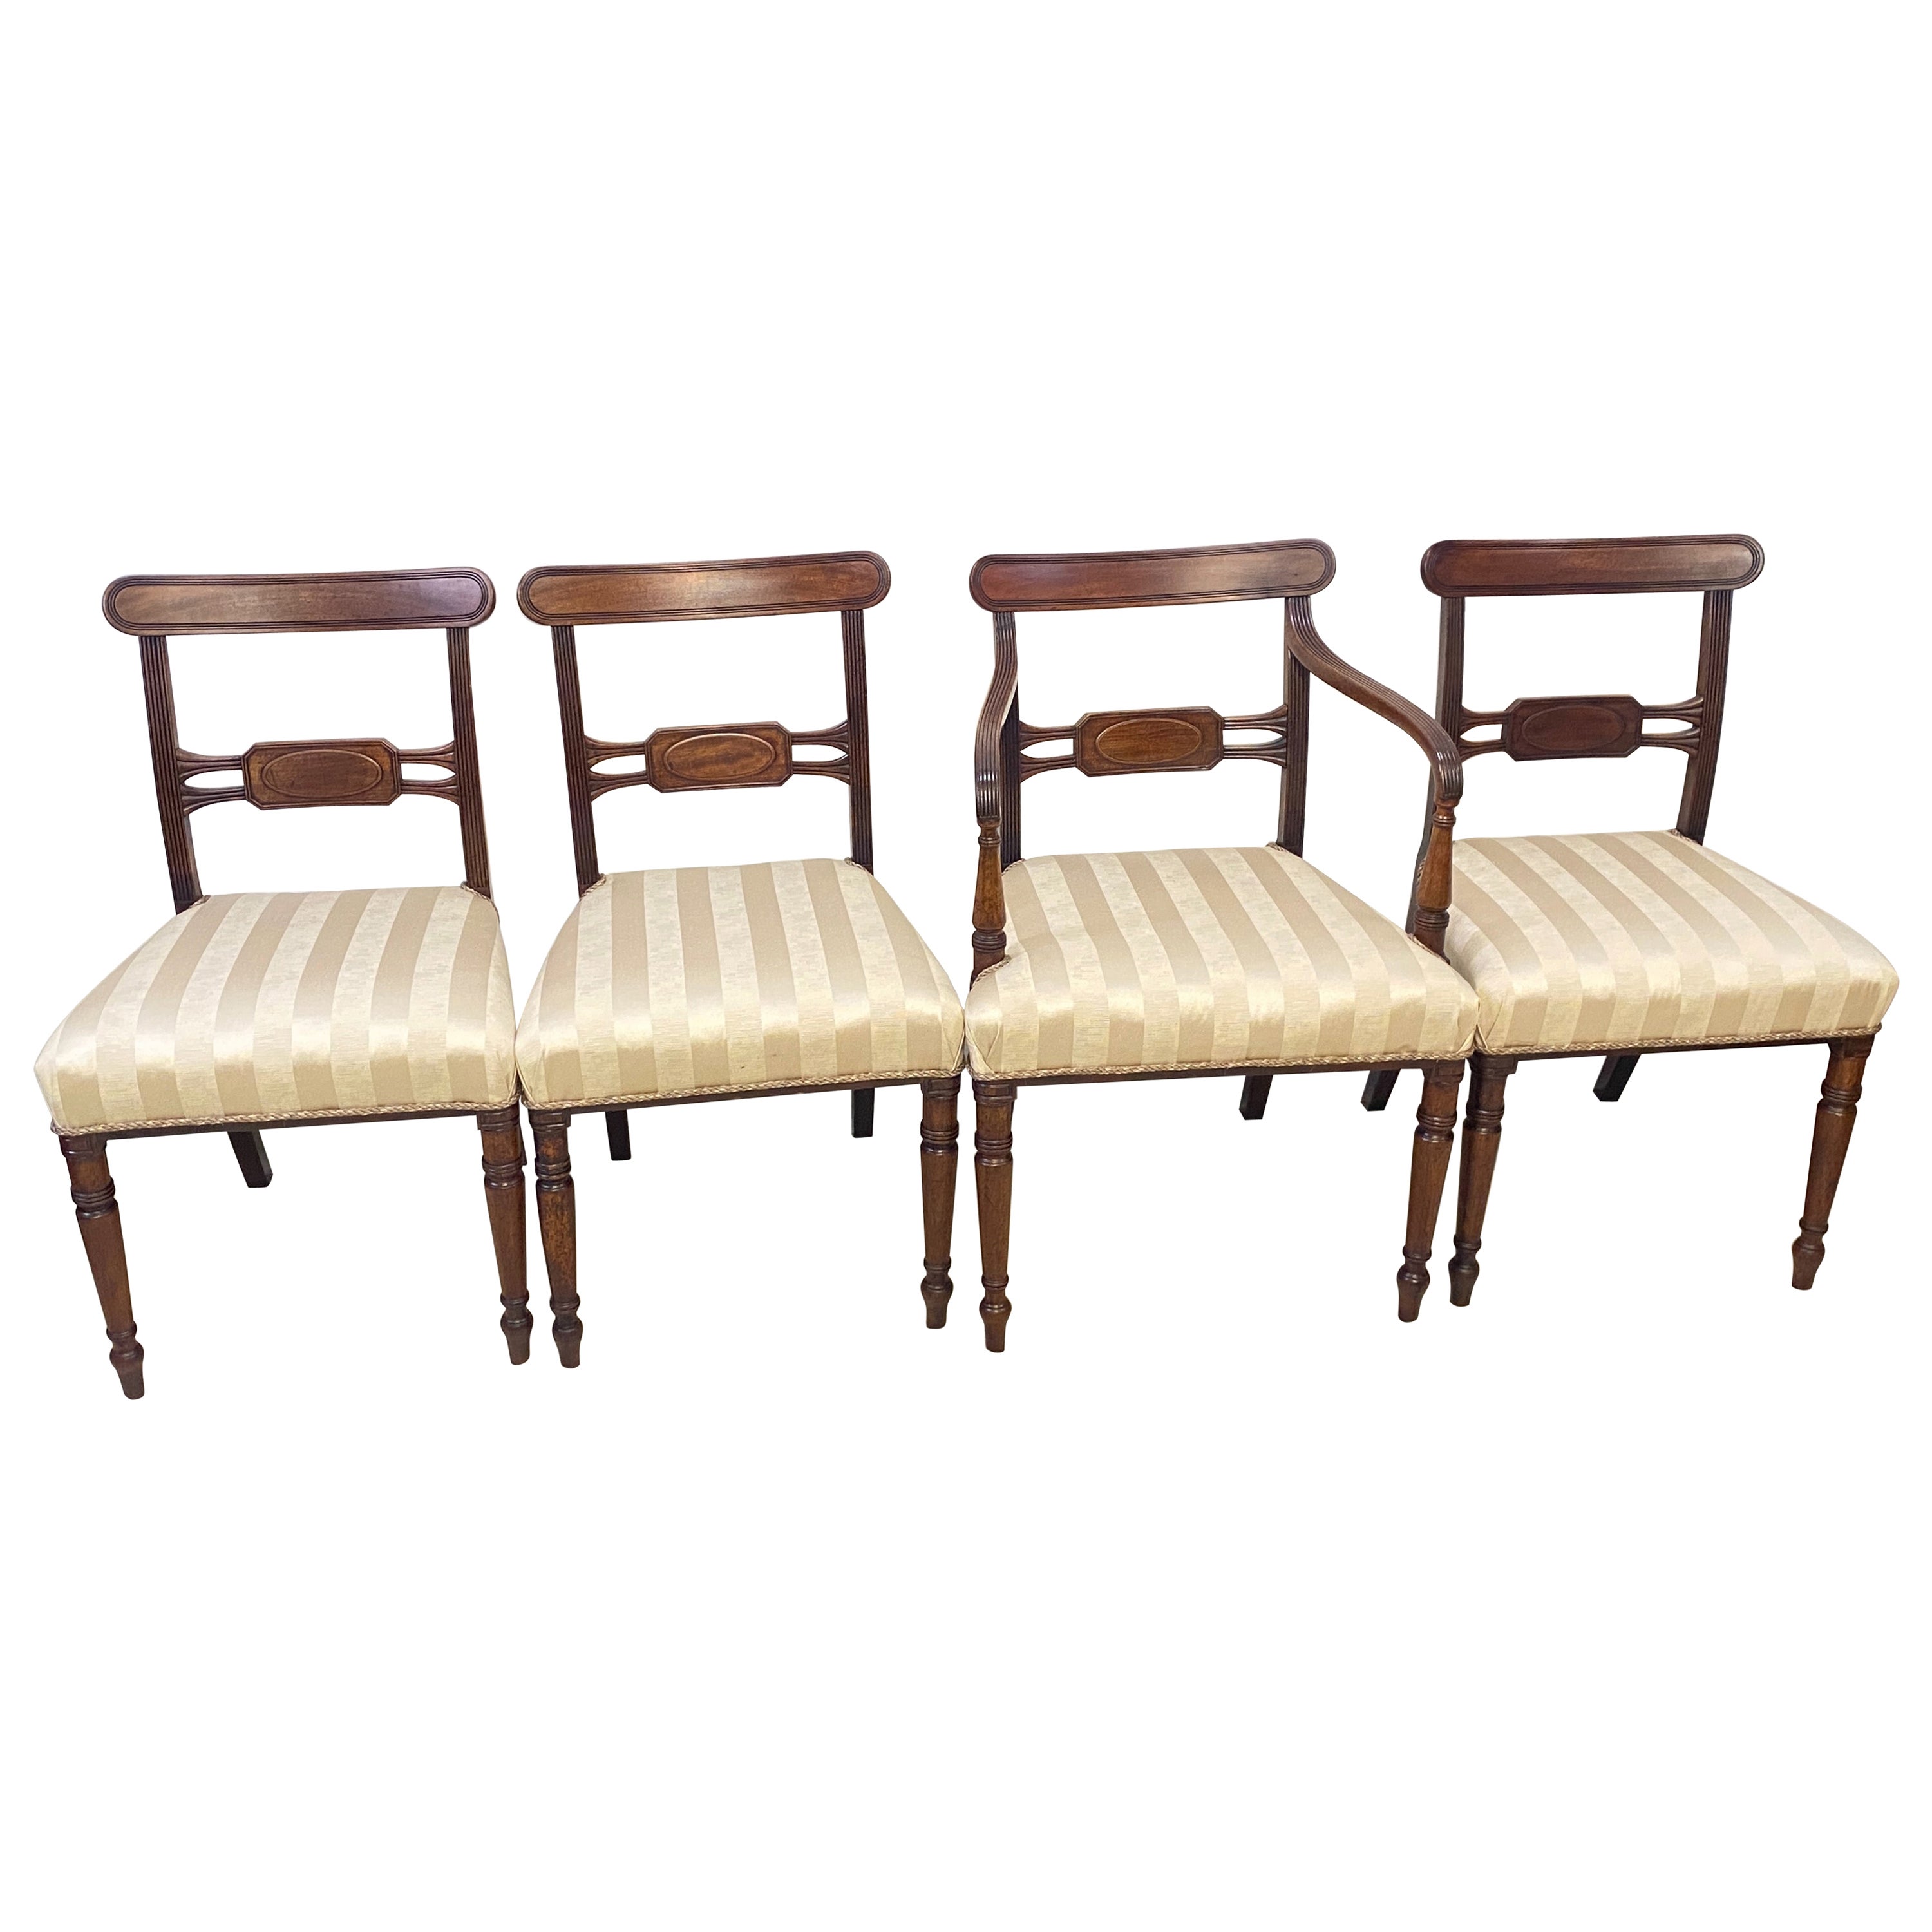 Set of 4 Early 19th Century English Regency Mahogany Dining Chairs, circa 1820